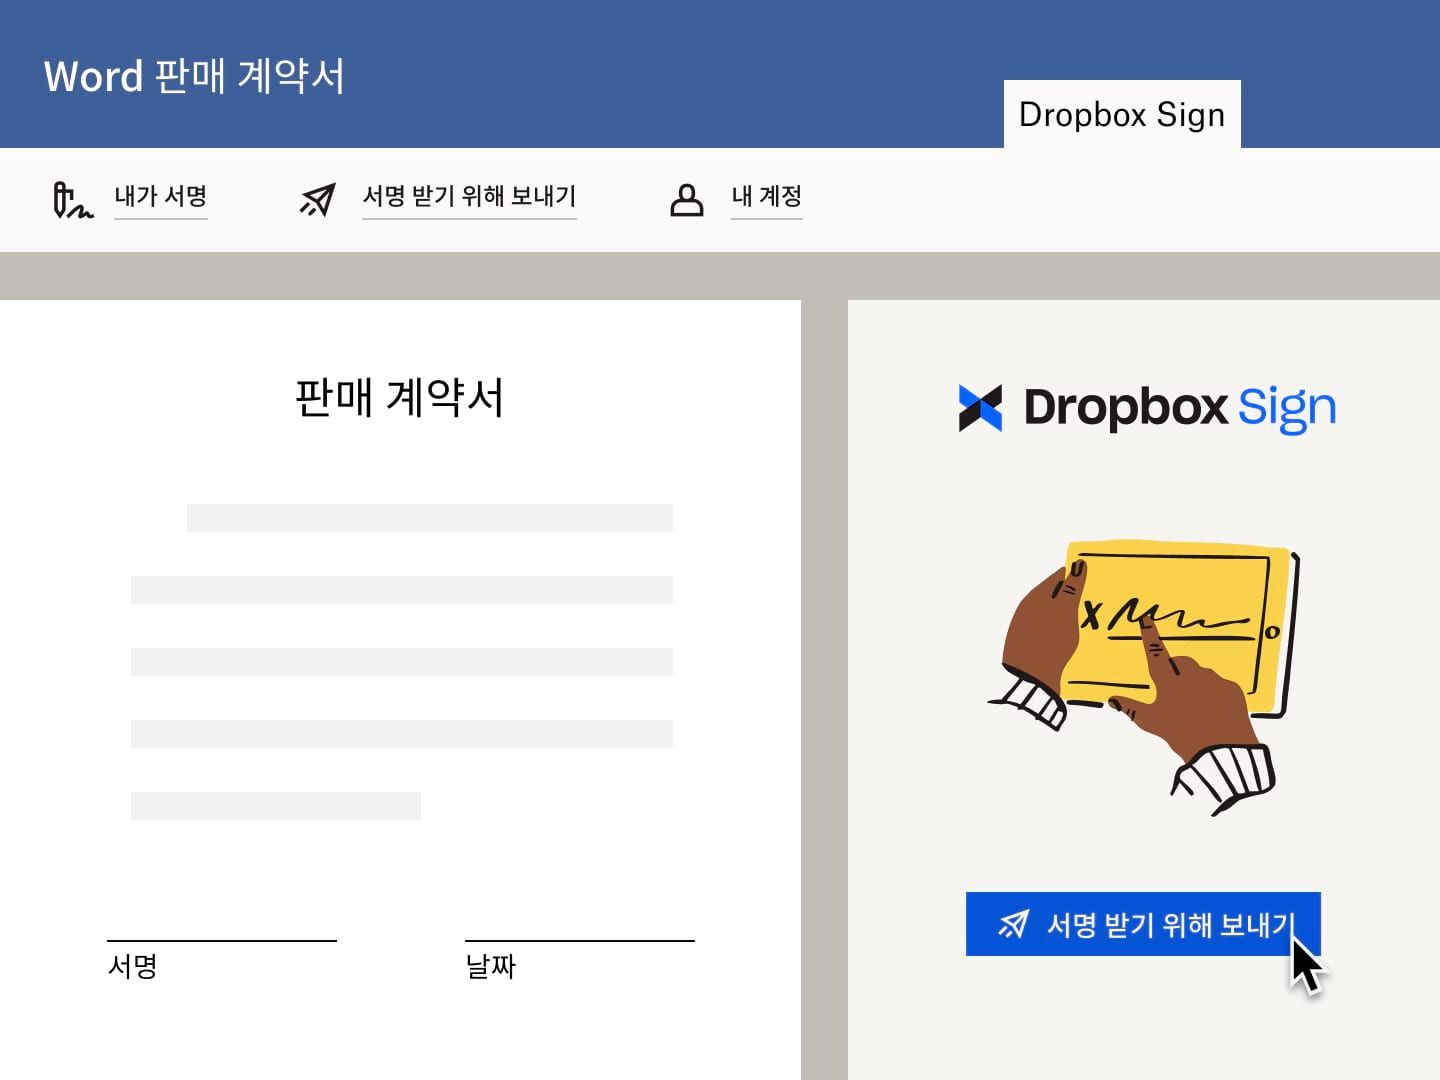 Microsoft Word에서 Dropbox Sign 전자 서명 요청 기능을 사용해 판매 계약서를 전송하는 사용자